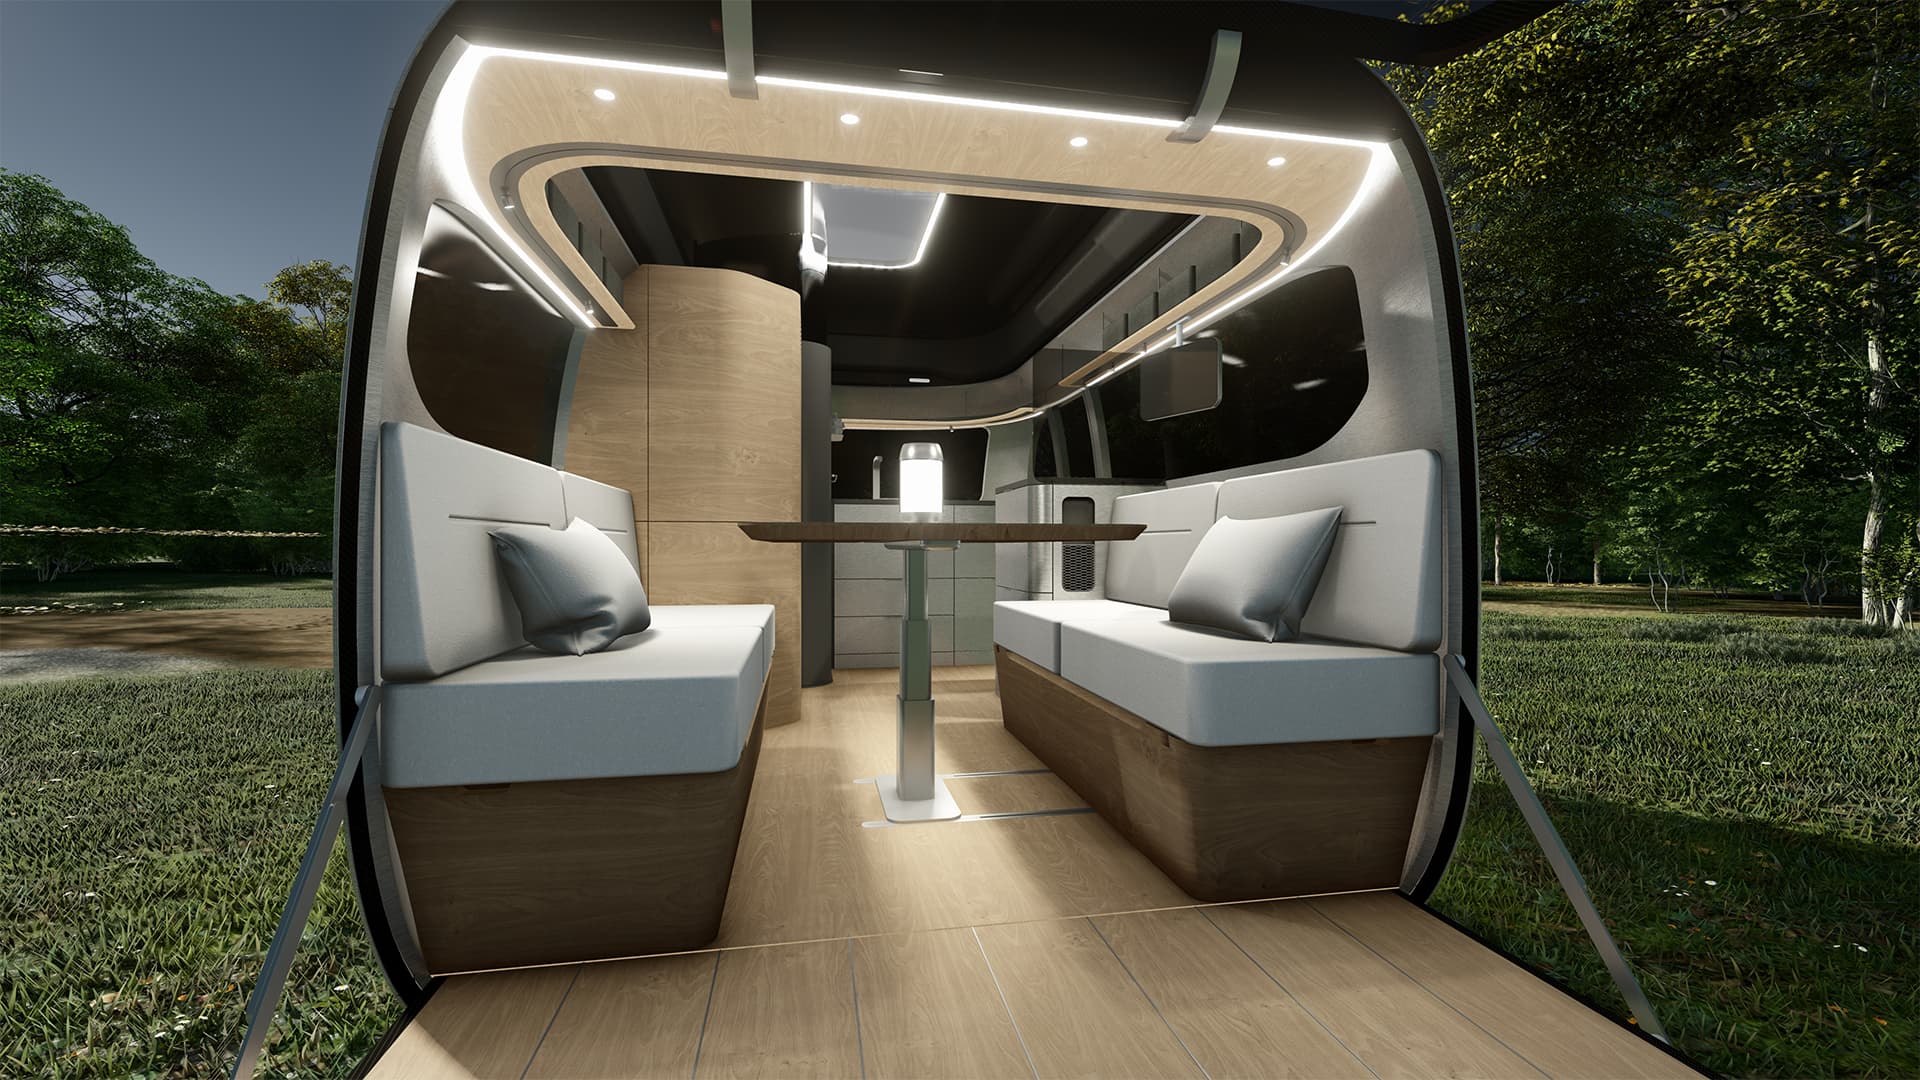 Airstream and Porsche unveil camping trailer concept